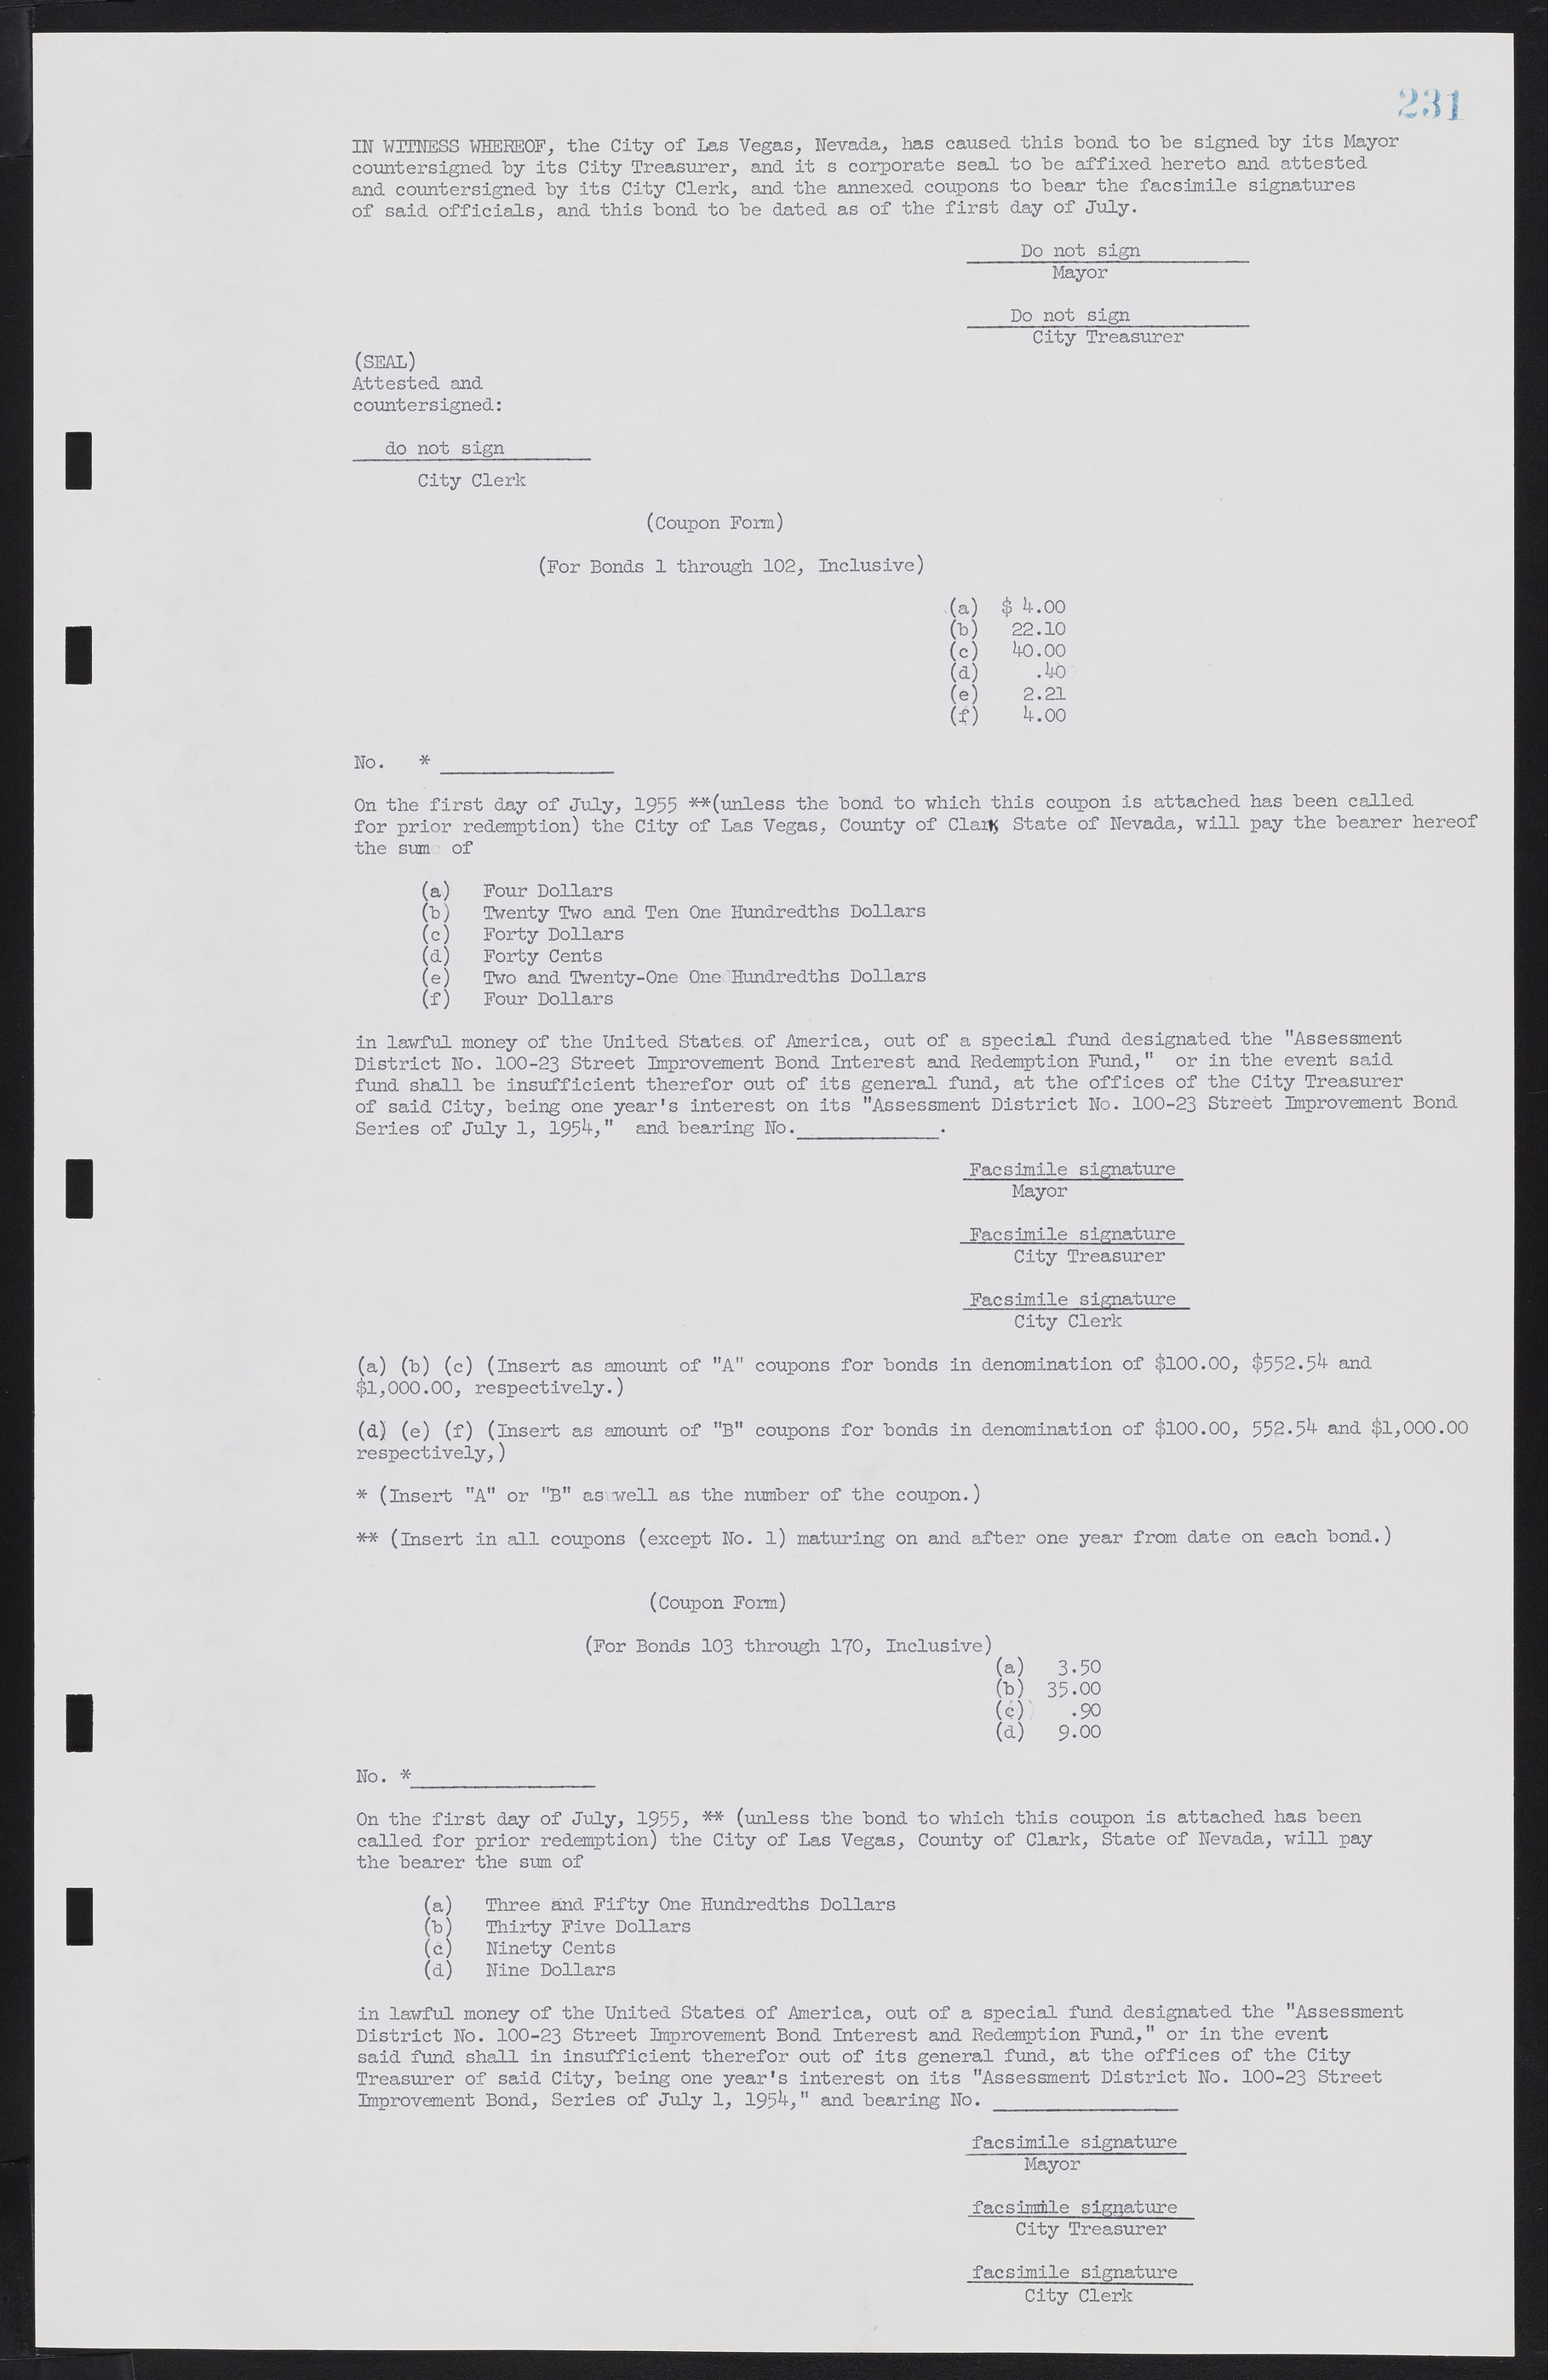 Las Vegas City Commission Minutes, February 17, 1954 to September 21, 1955, lvc000009-237